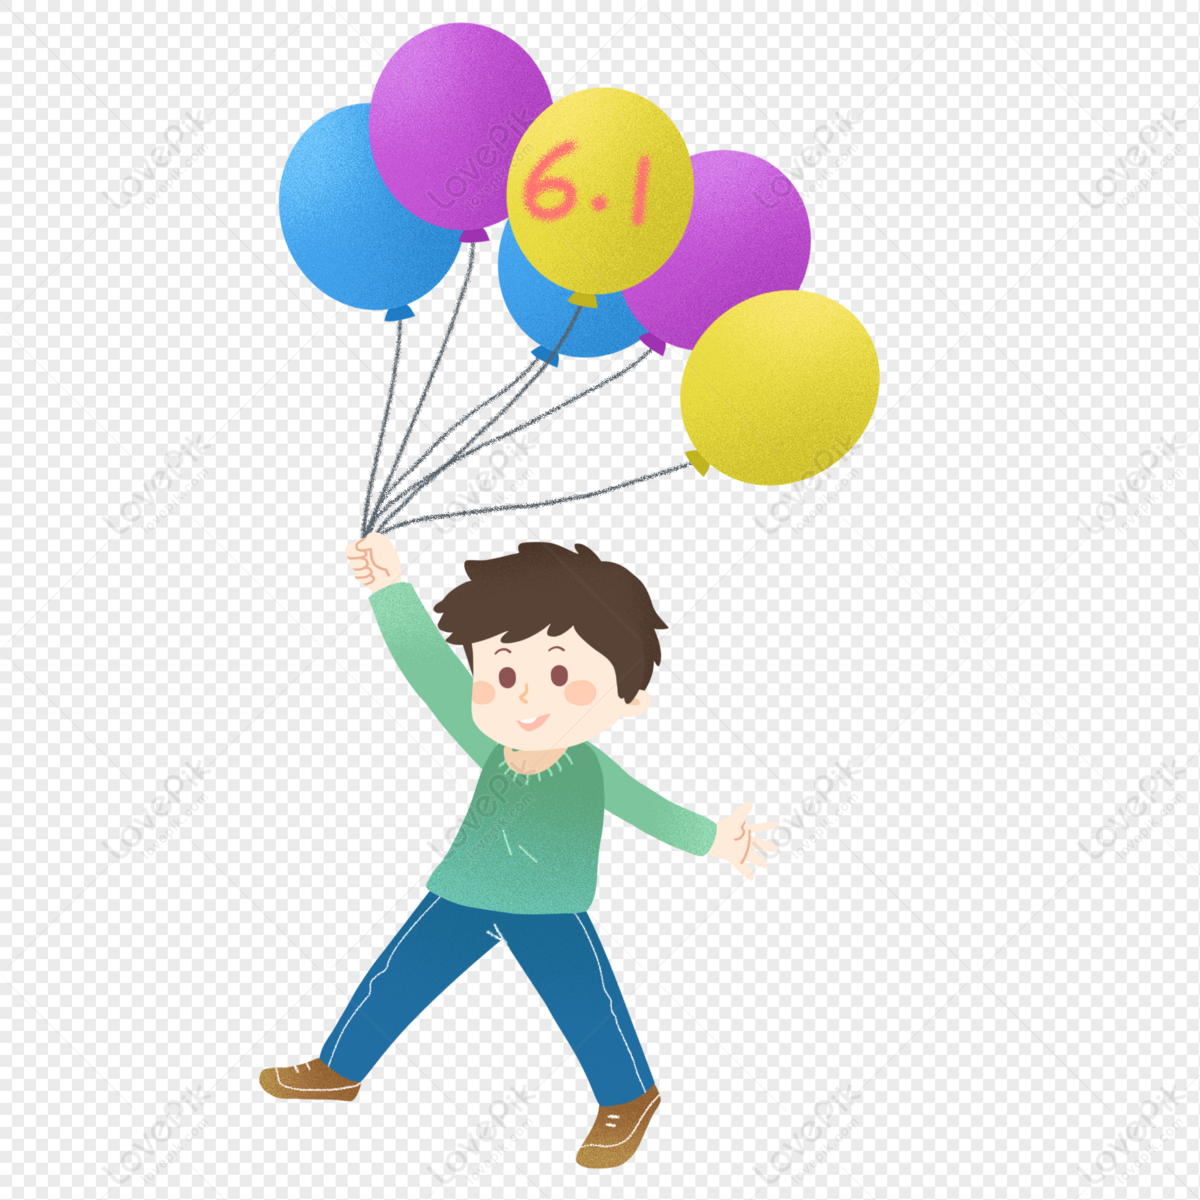 Cartoon Boy Jack Holding Balloons PNG Images & PSDs for Download